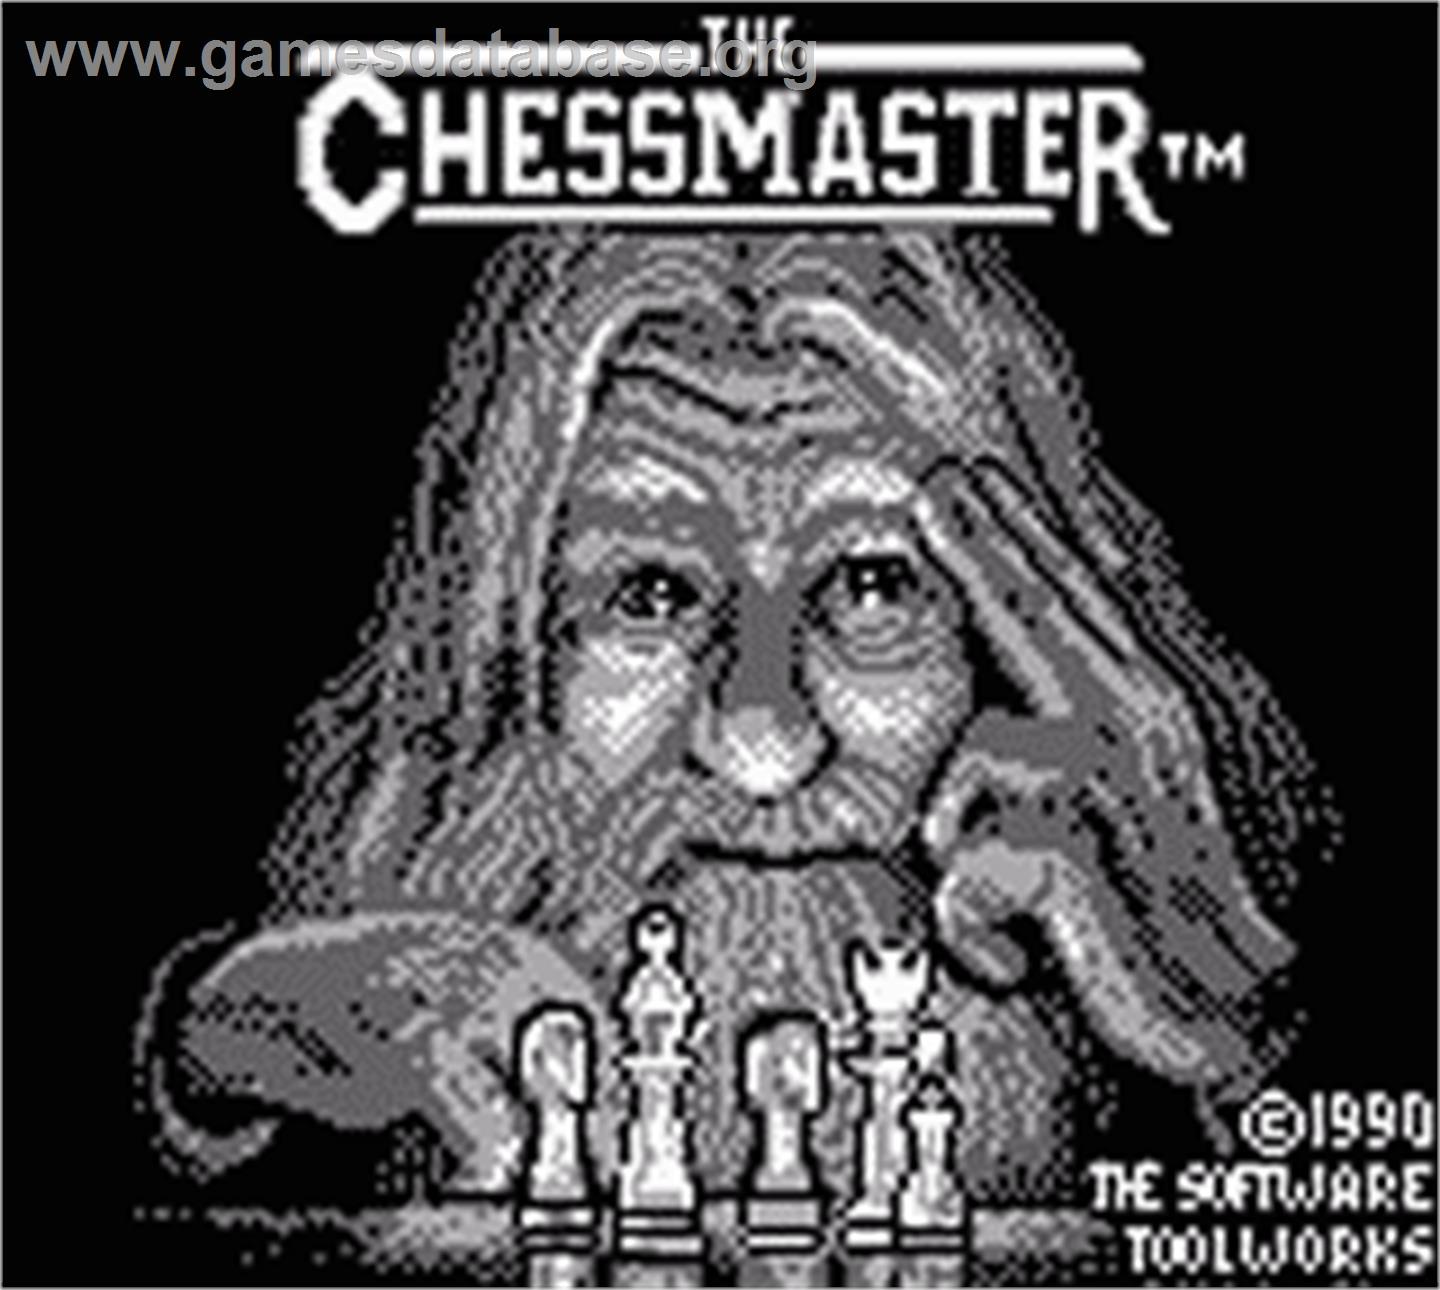 Chessmaster - Nintendo Game Boy - Artwork - Title Screen